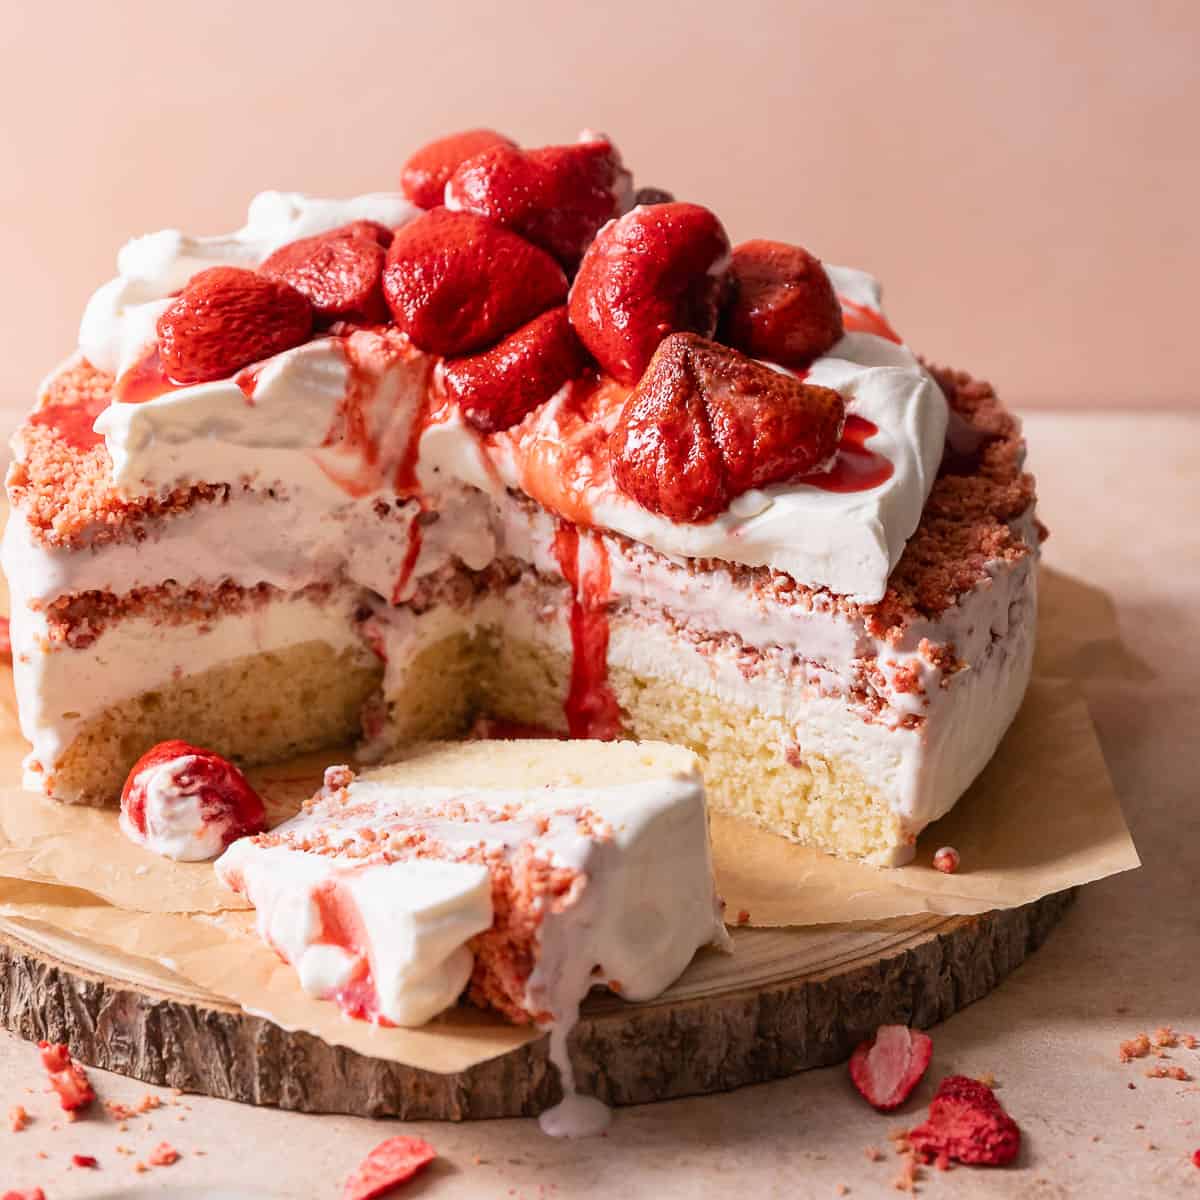 Strawberry shortcake ice cream cake on a wooden cake stand.